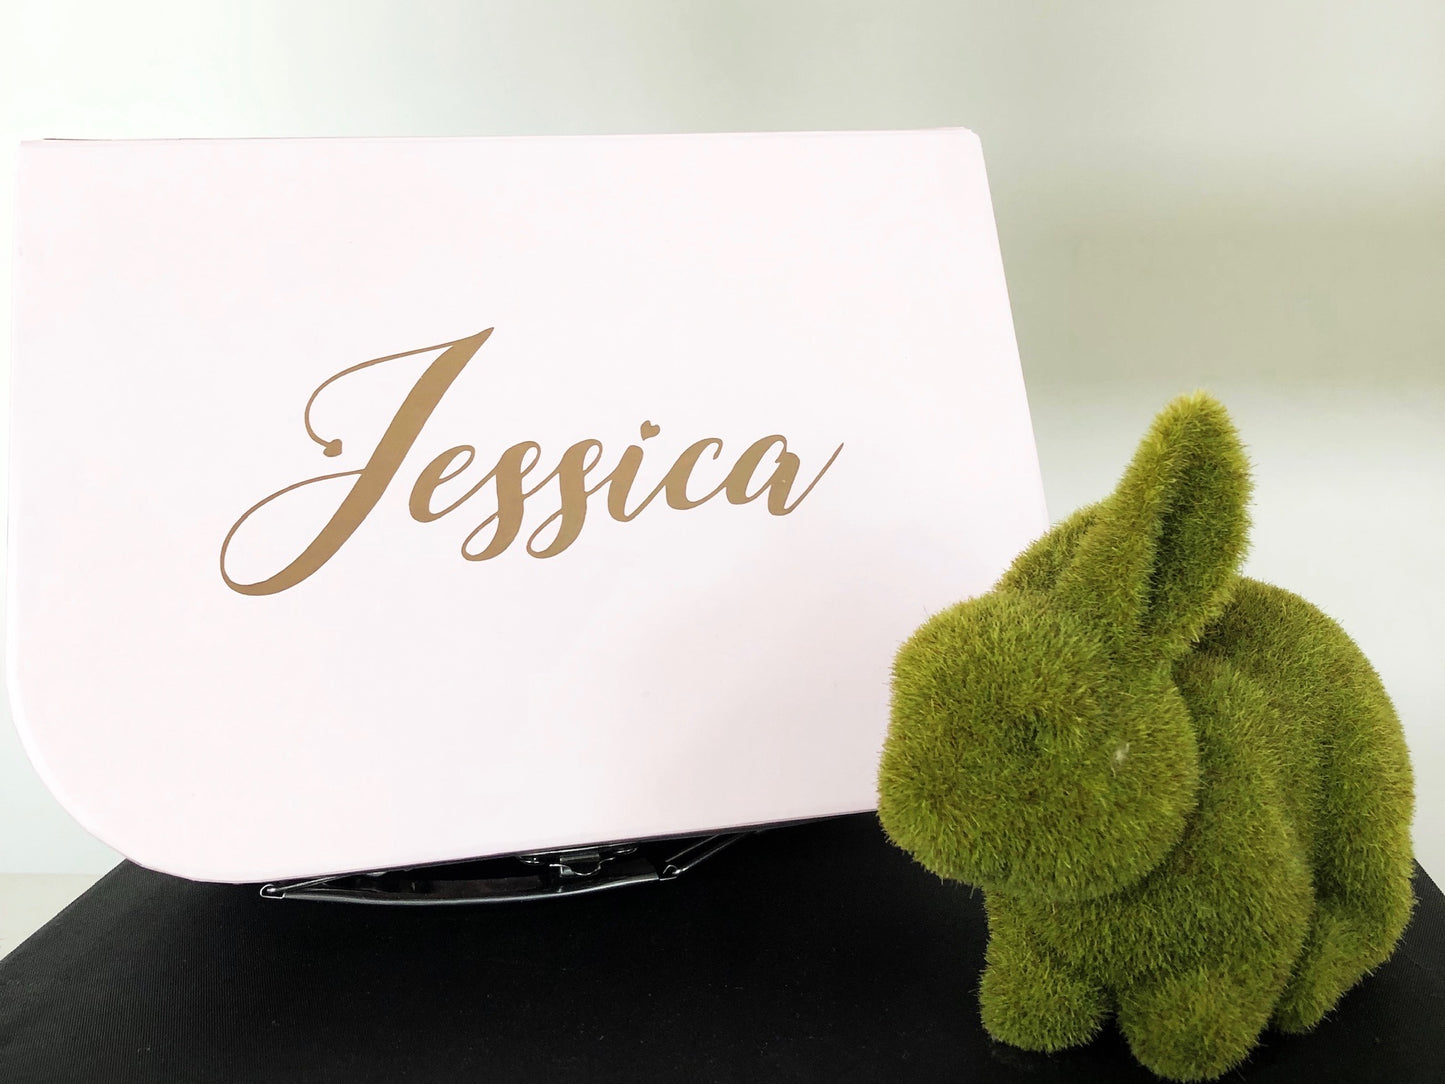 Easter Mini Suitcase Keepsake Gift Box